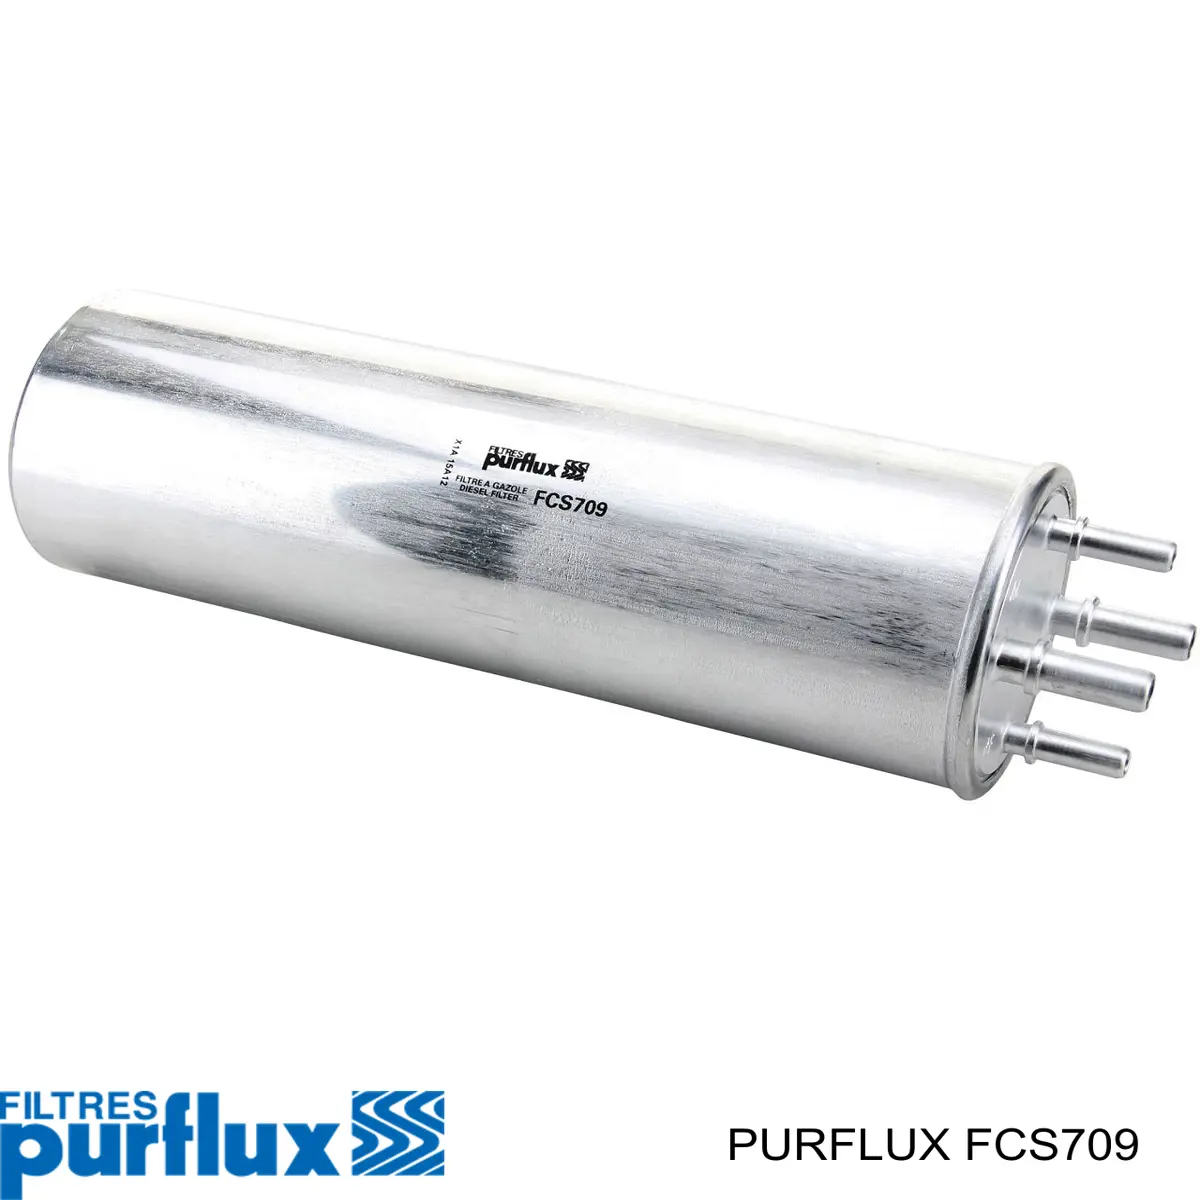 Filtro combustible FCS709 Purflux